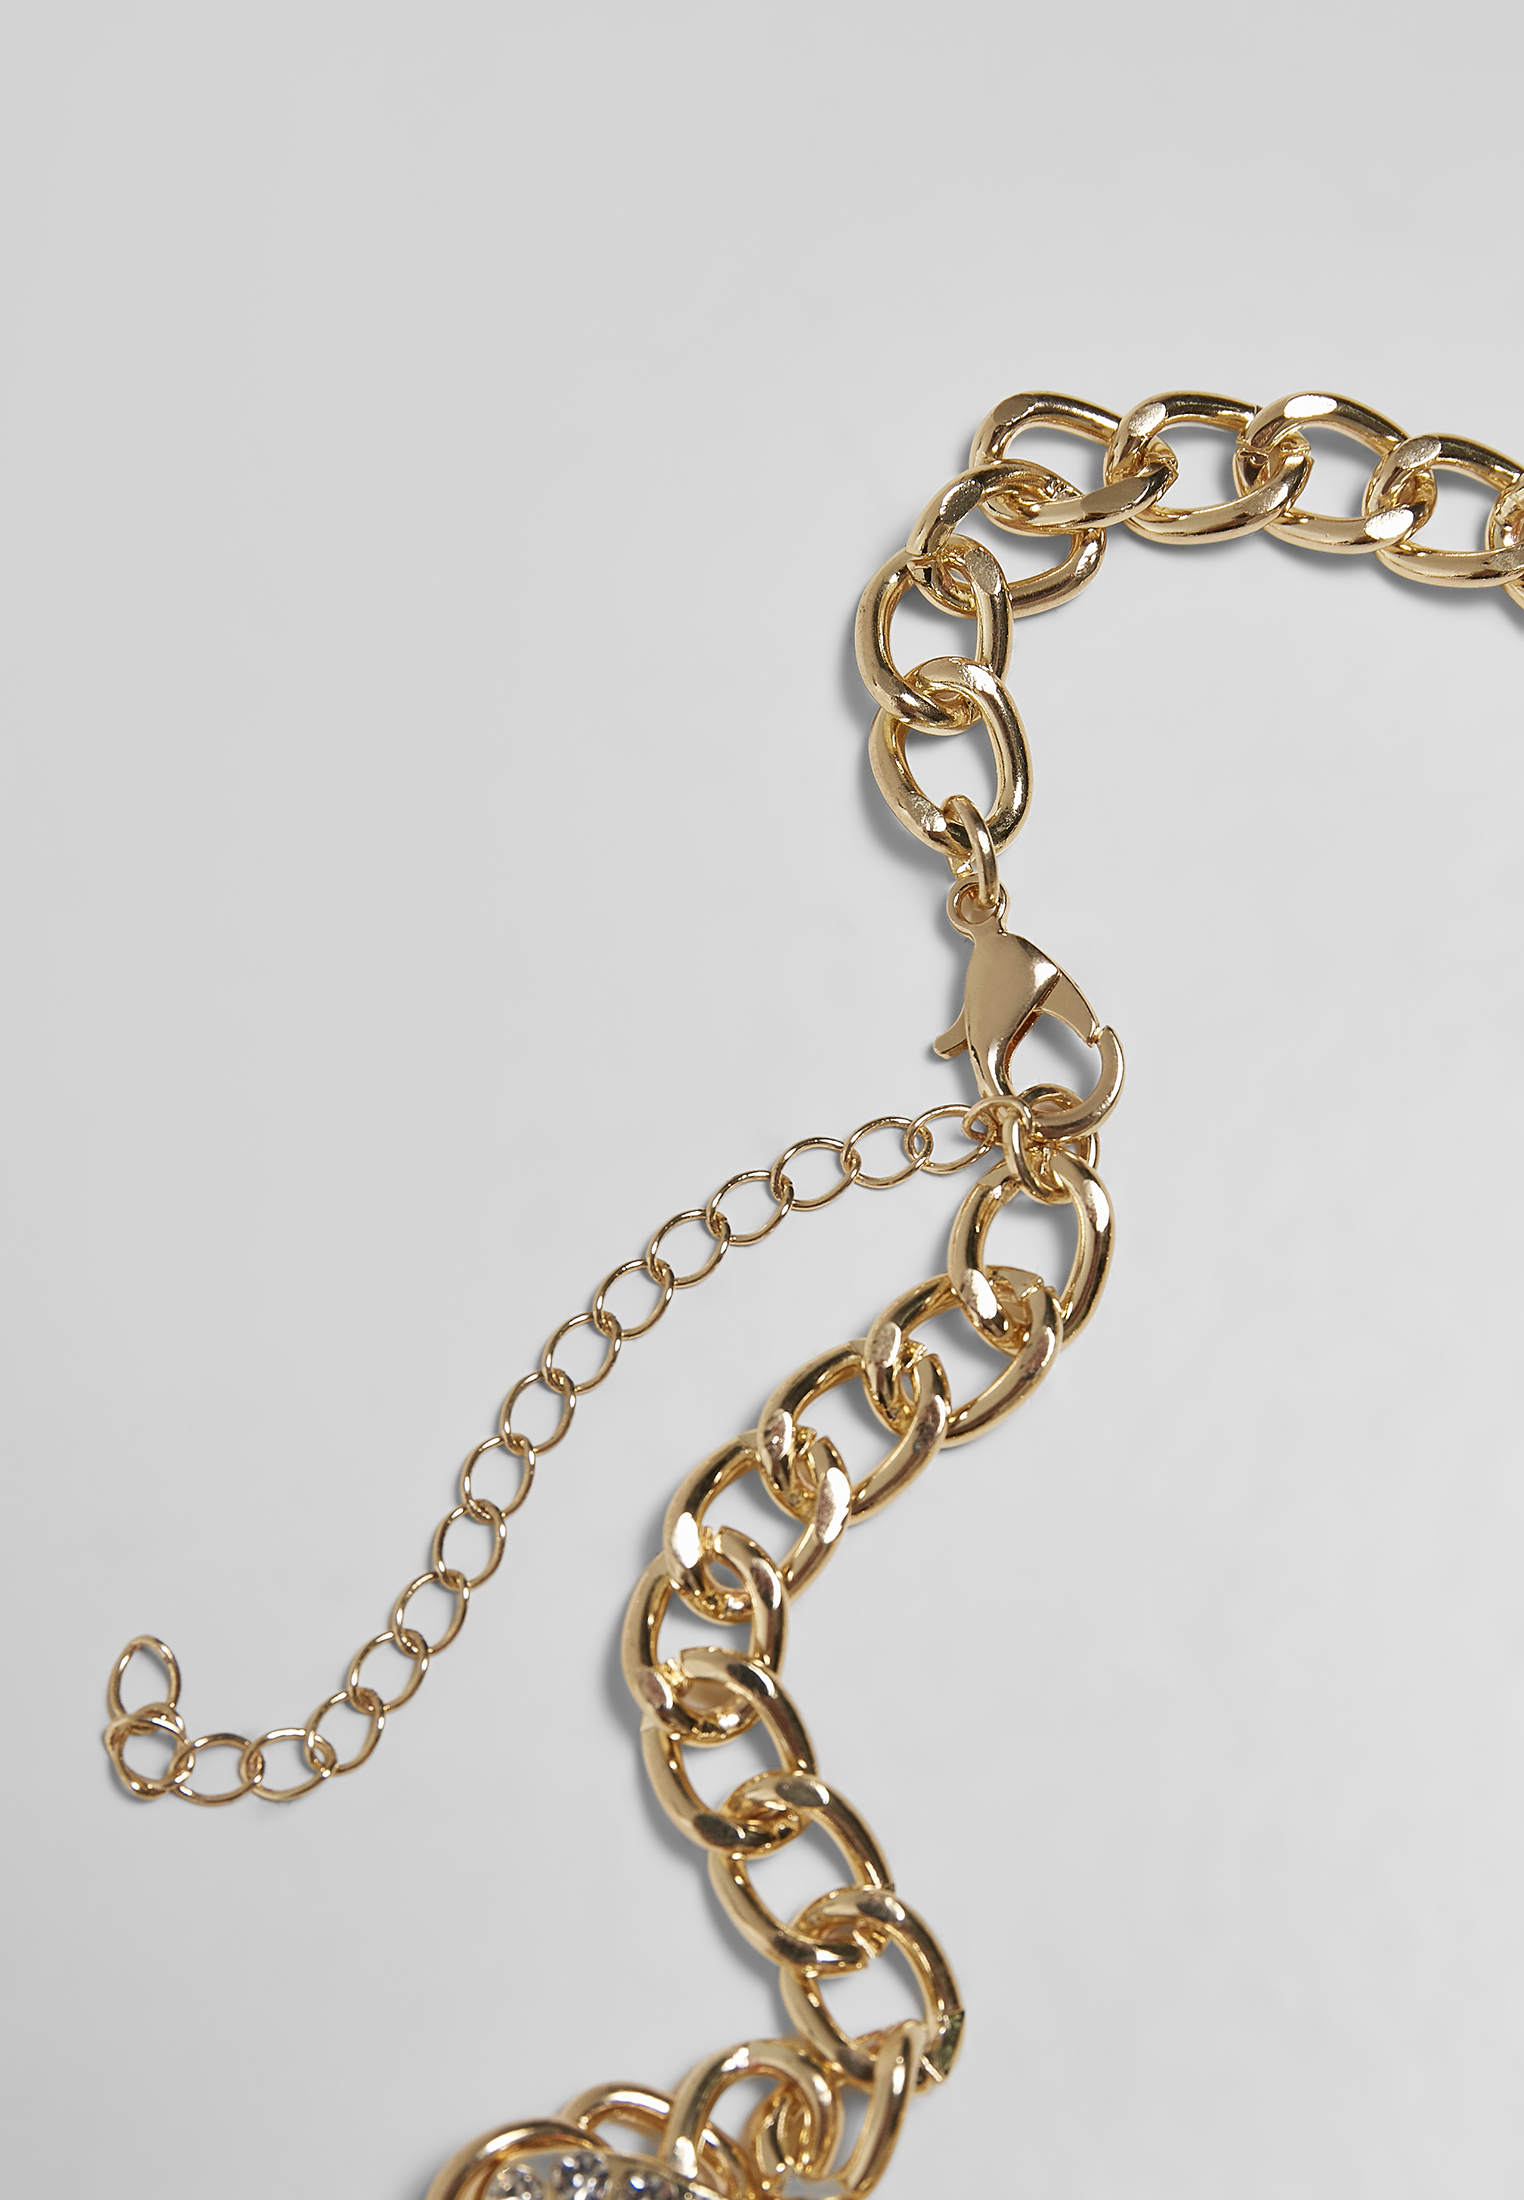 Schmuck Statement Necklace in Farbe gold